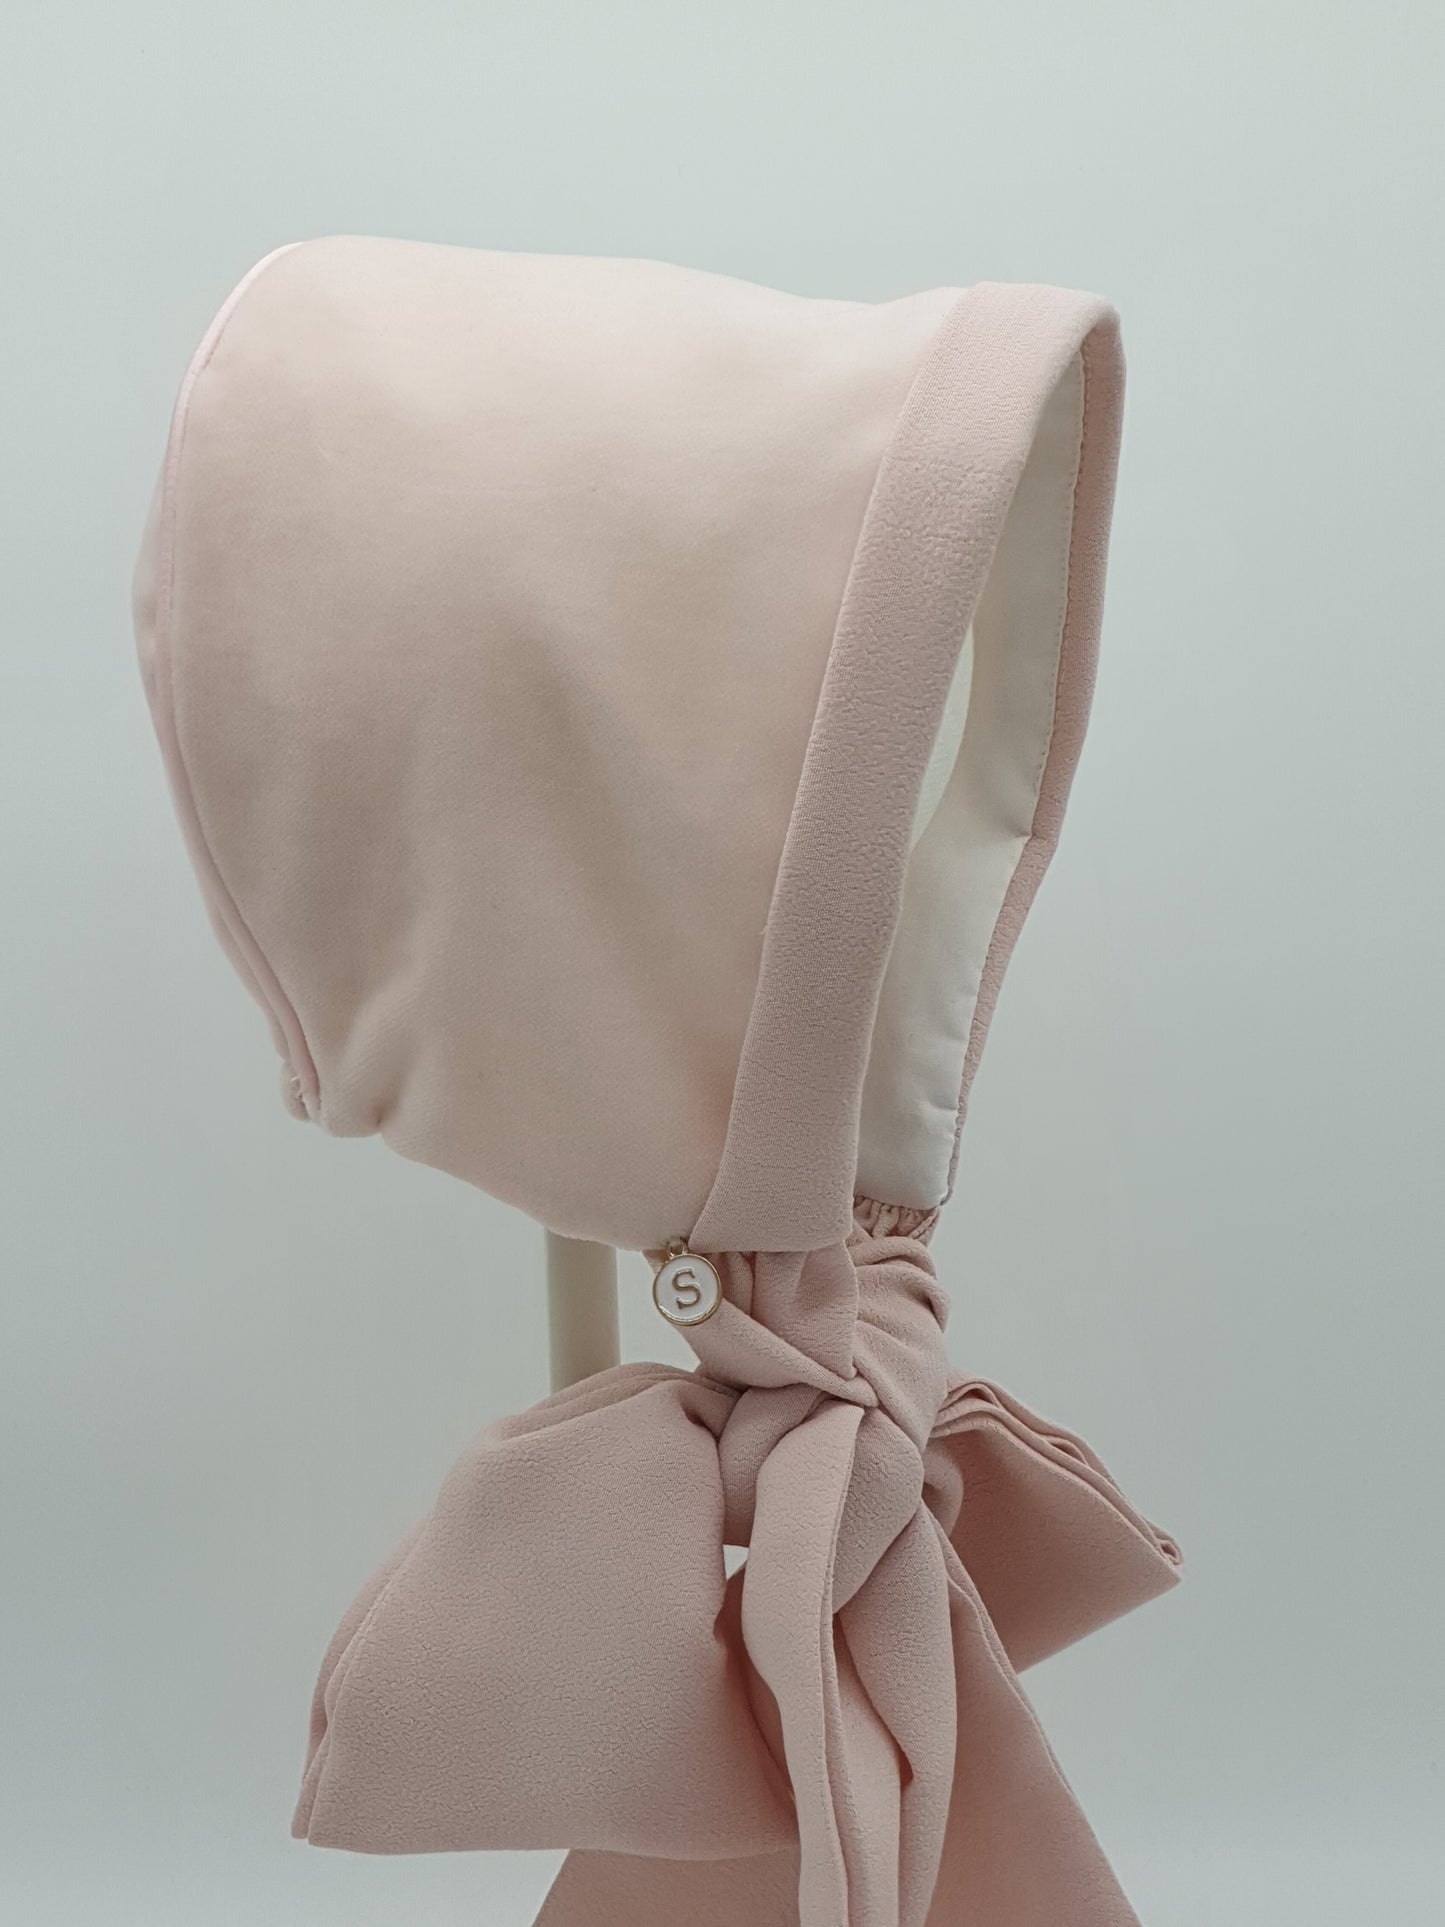 Exclusive Bonnet, Soft Cotton Velvet with wide ties